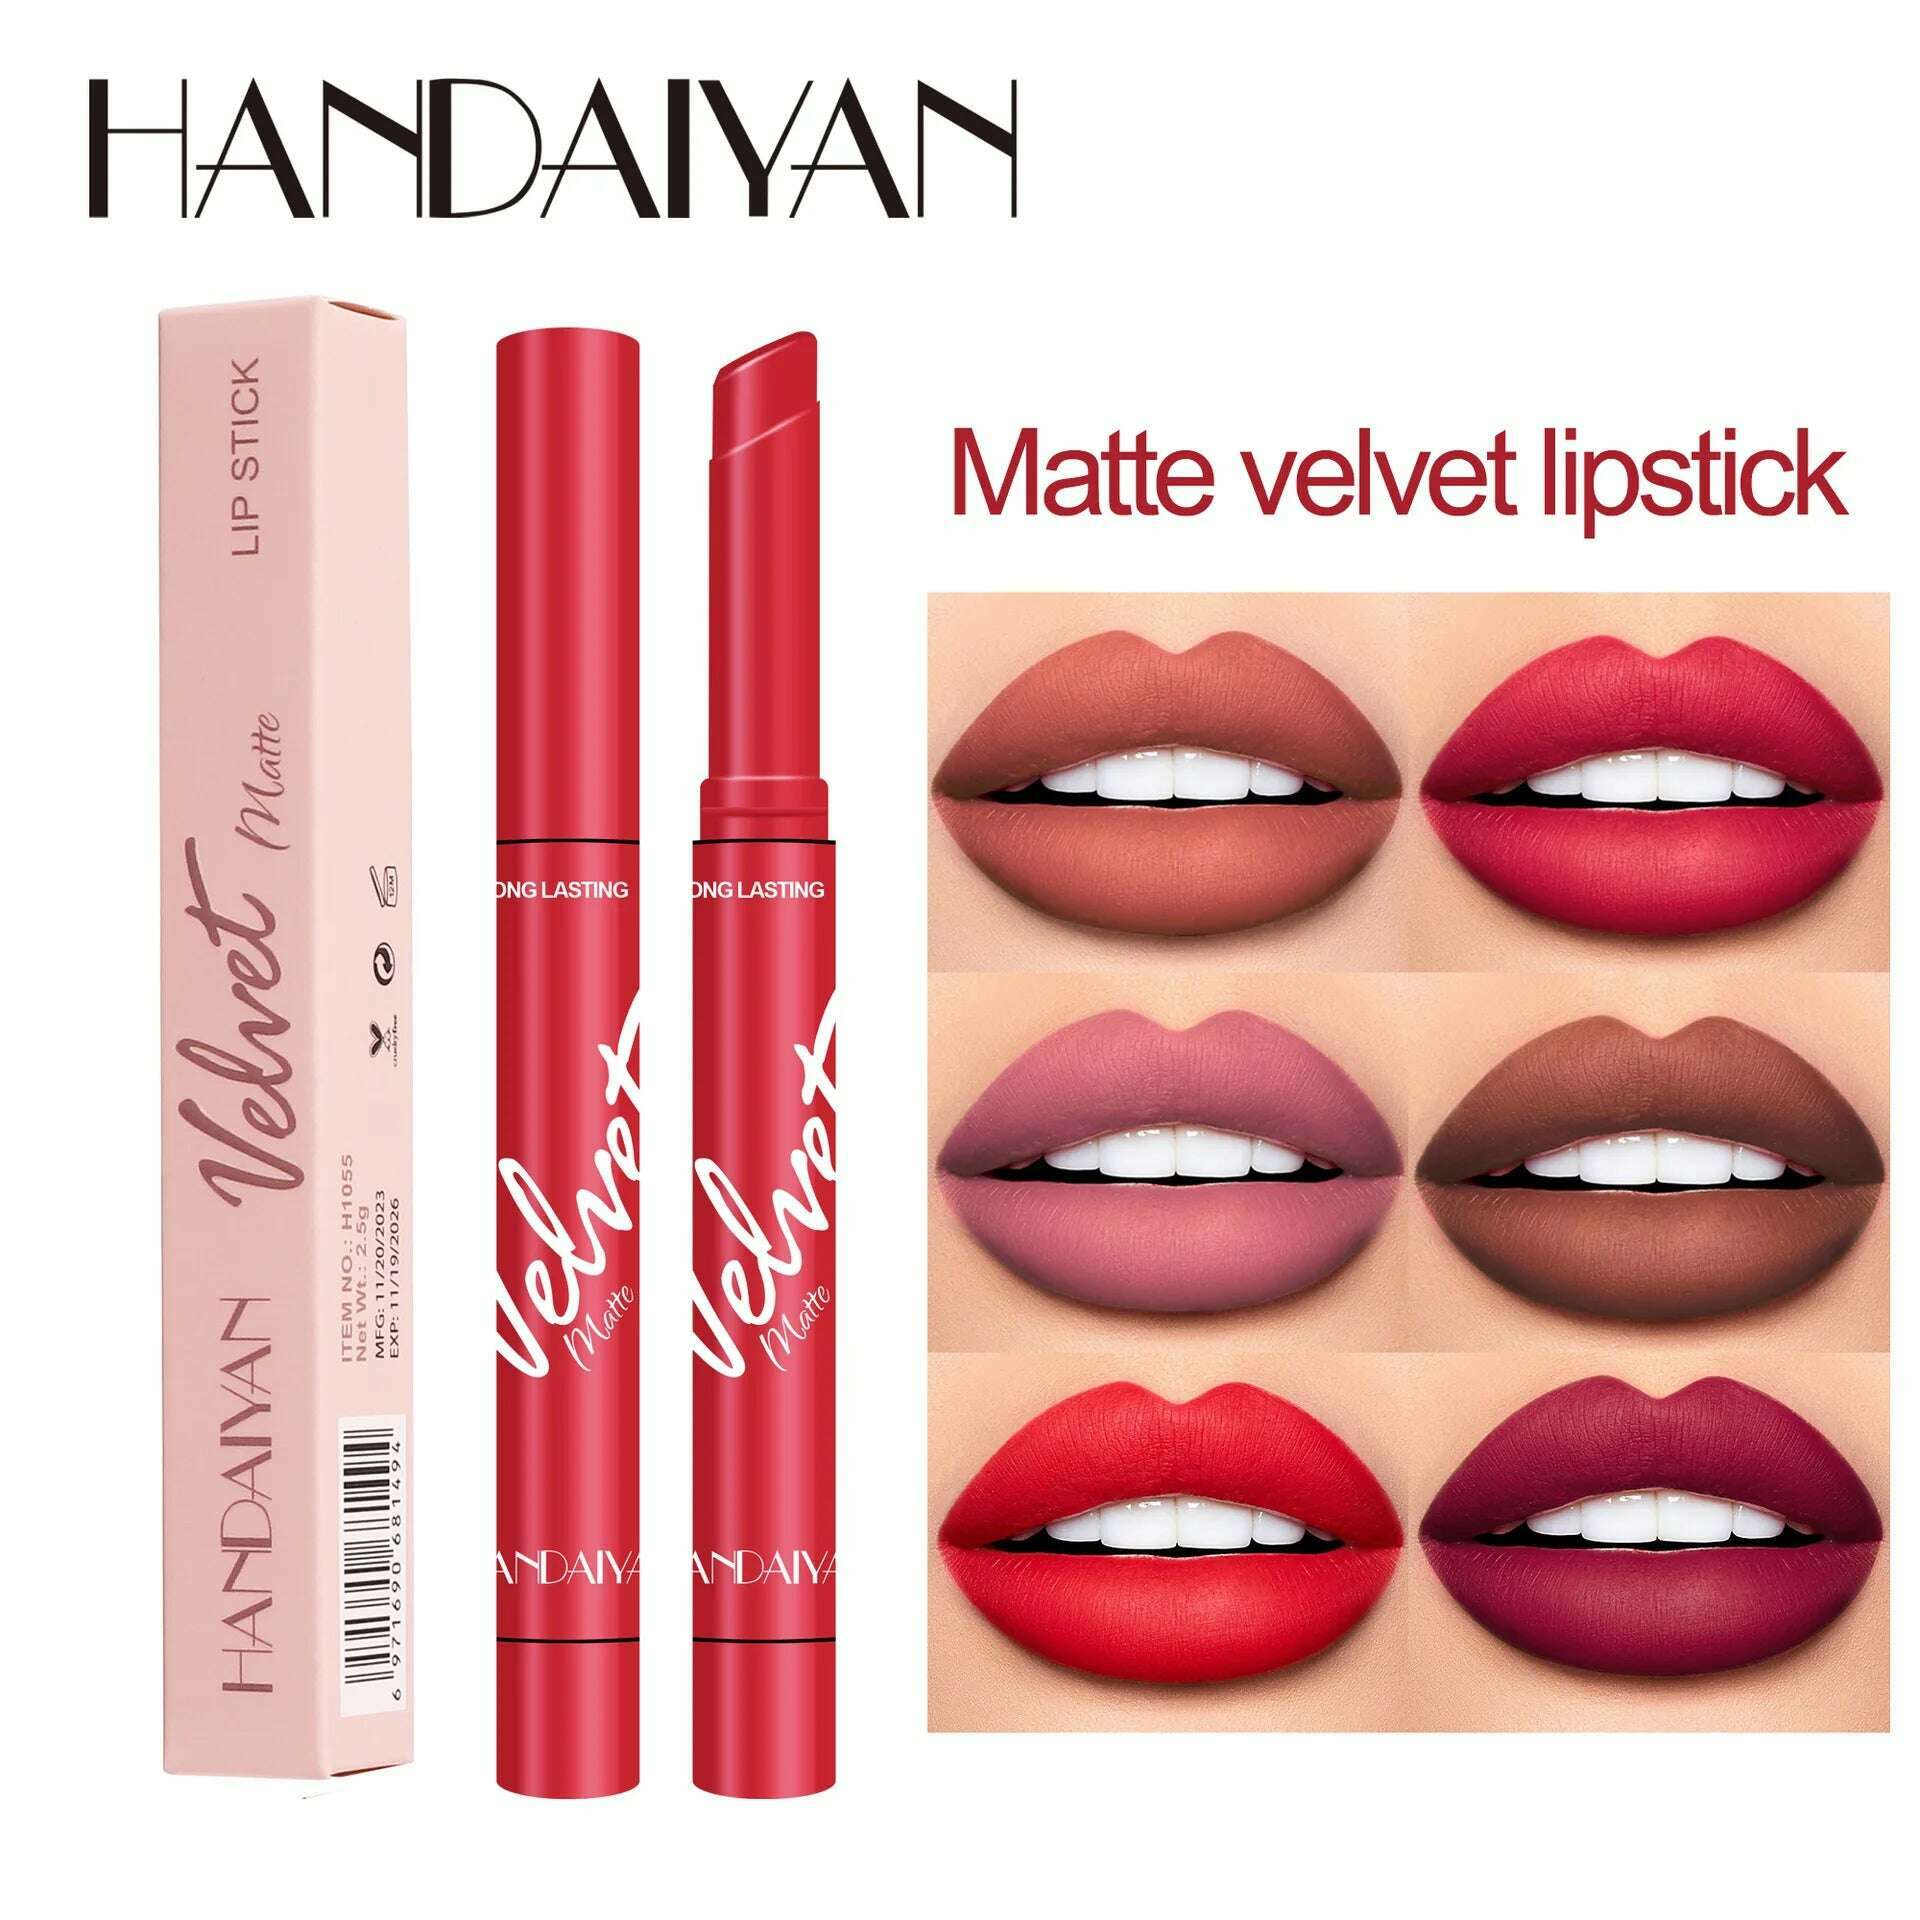 KIMLUD, Handaiyan 8 Colors Matte Waterproof Velvet Nude Lipstick Pink Red Sexy Lip Matt Long Lasting Pigments Makeup, KIMLUD Women's Clothes